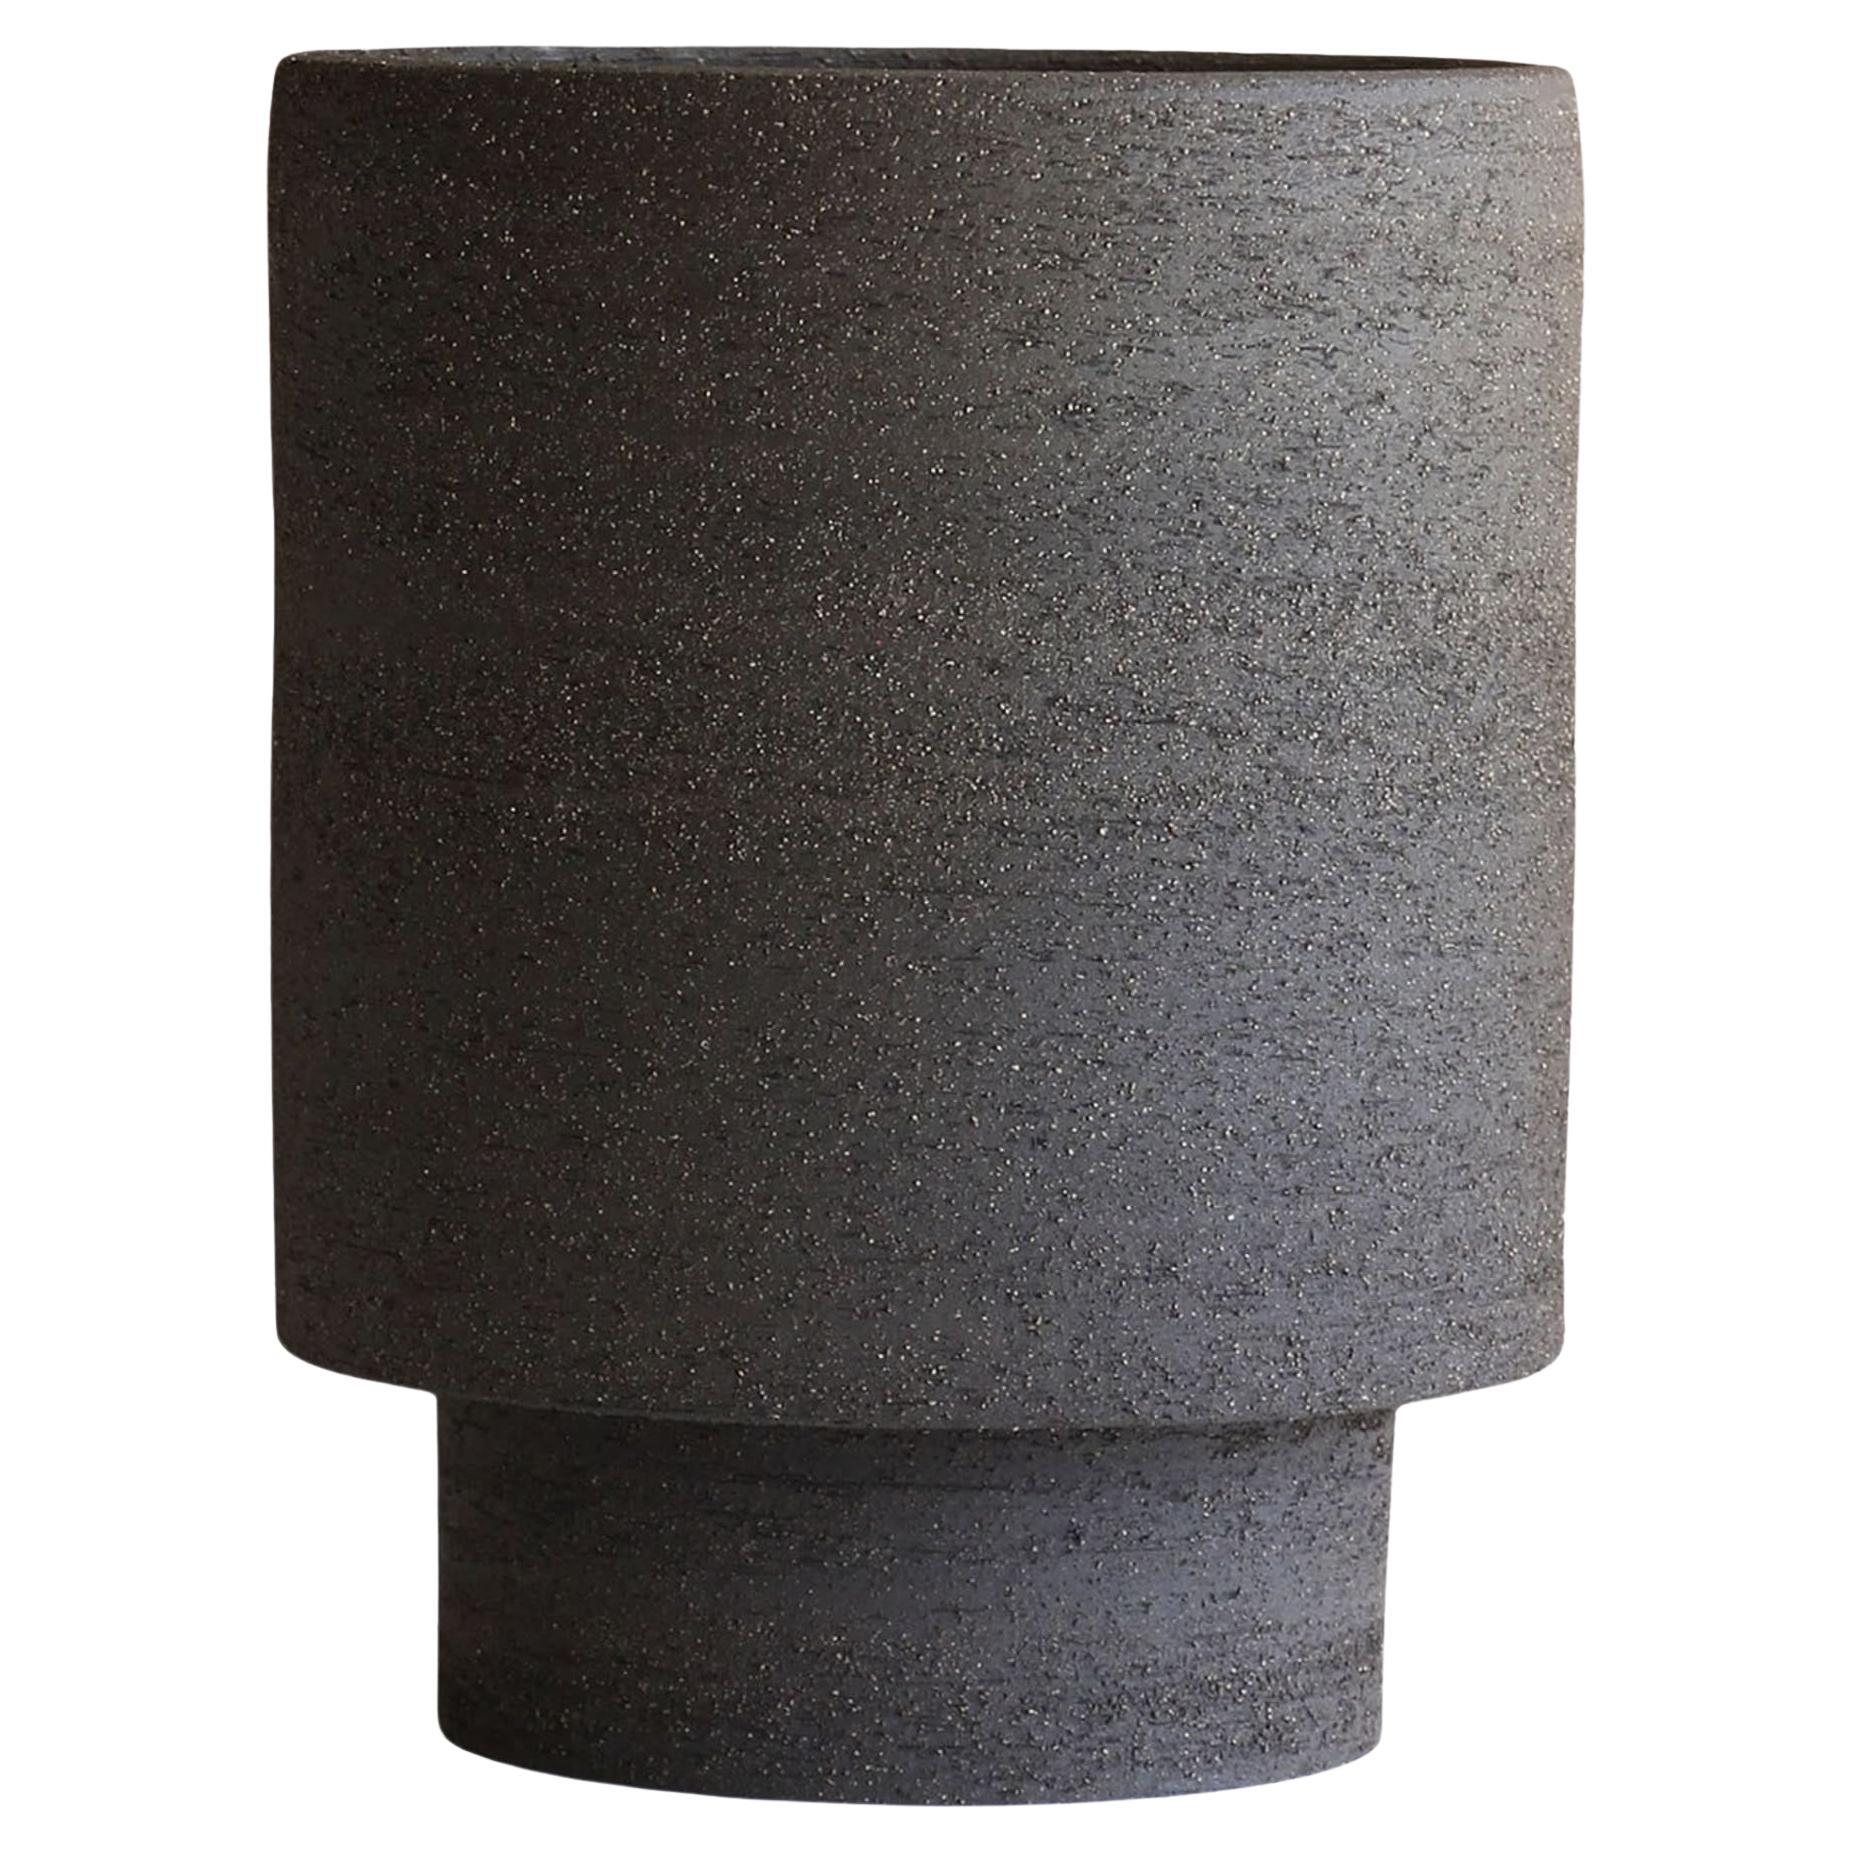 Tower-Like Carbon-Black Decorative Vase For Sale